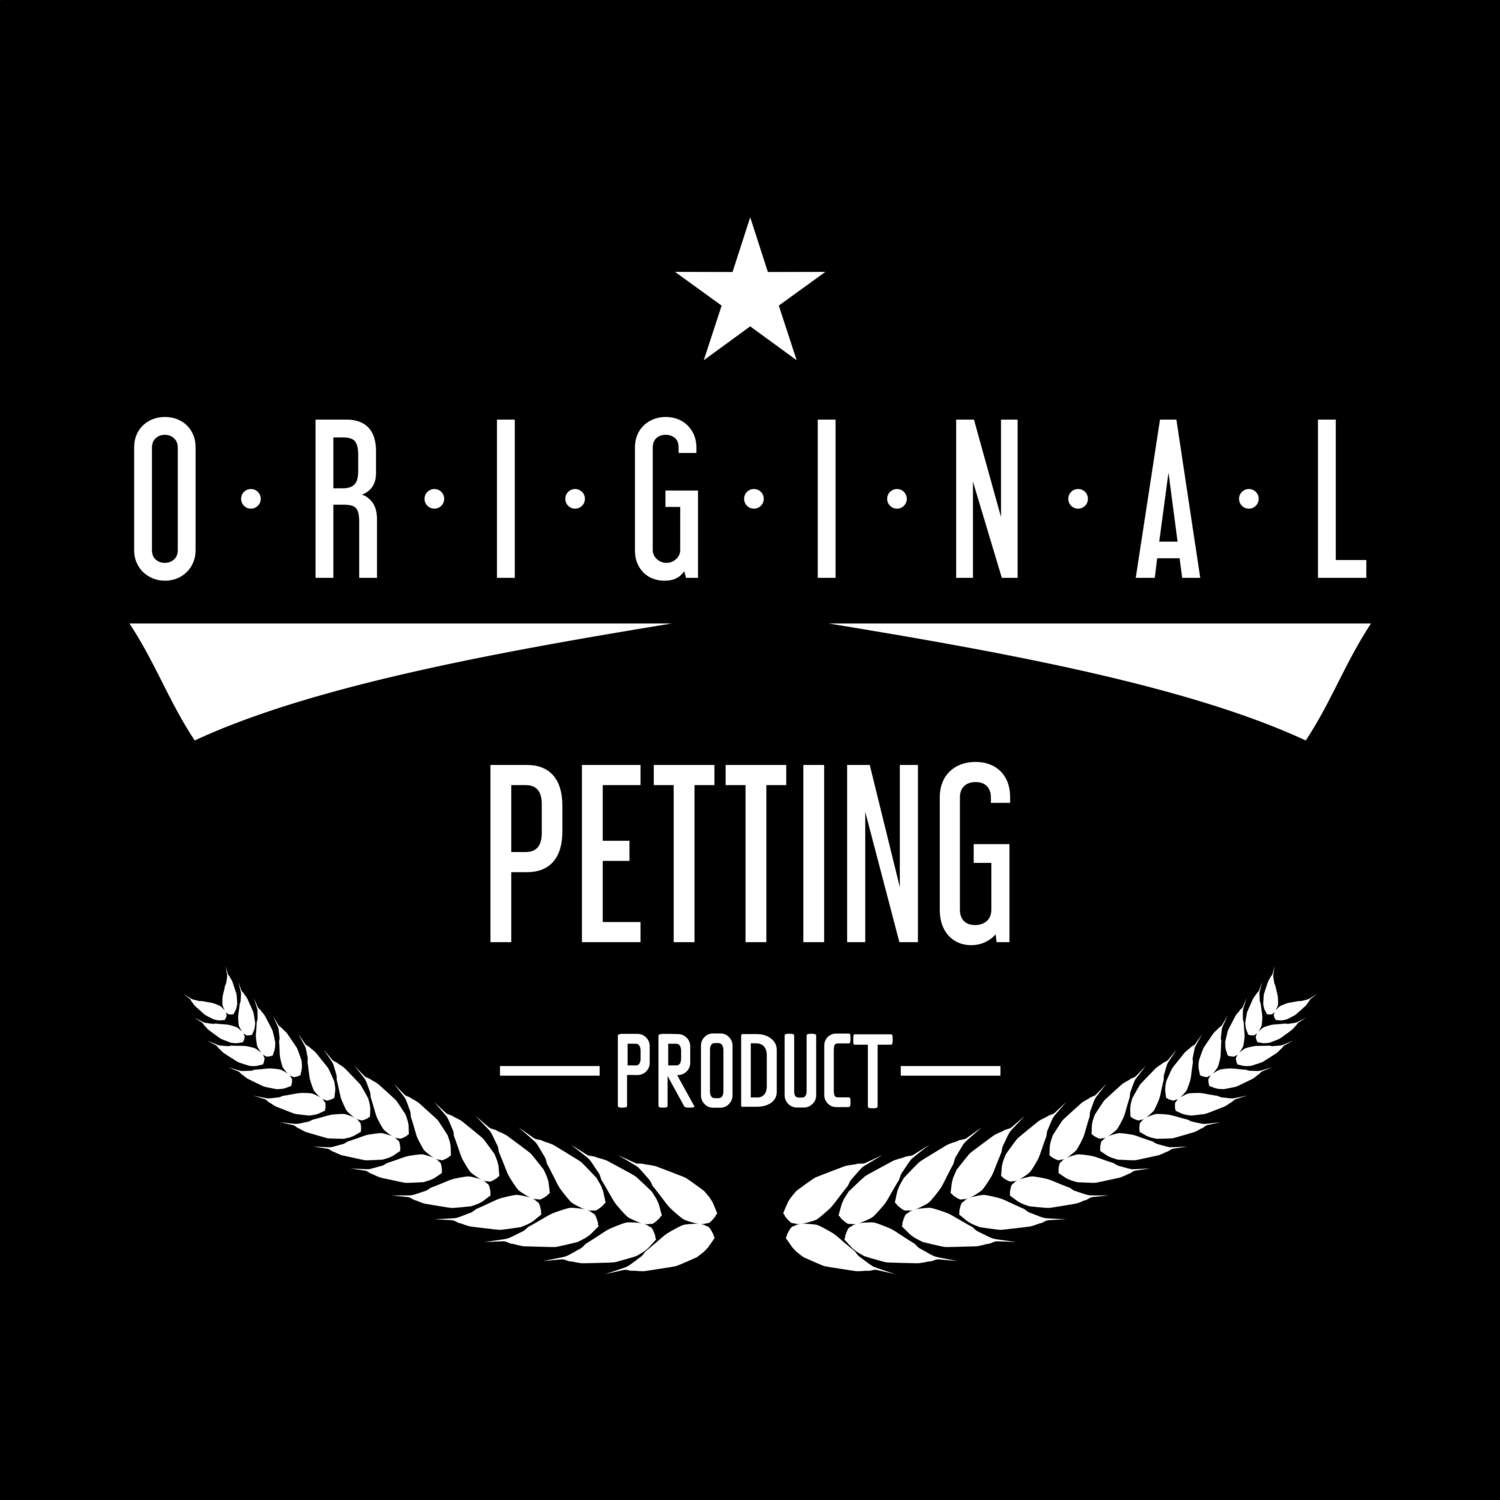 Petting T-Shirt »Original Product«